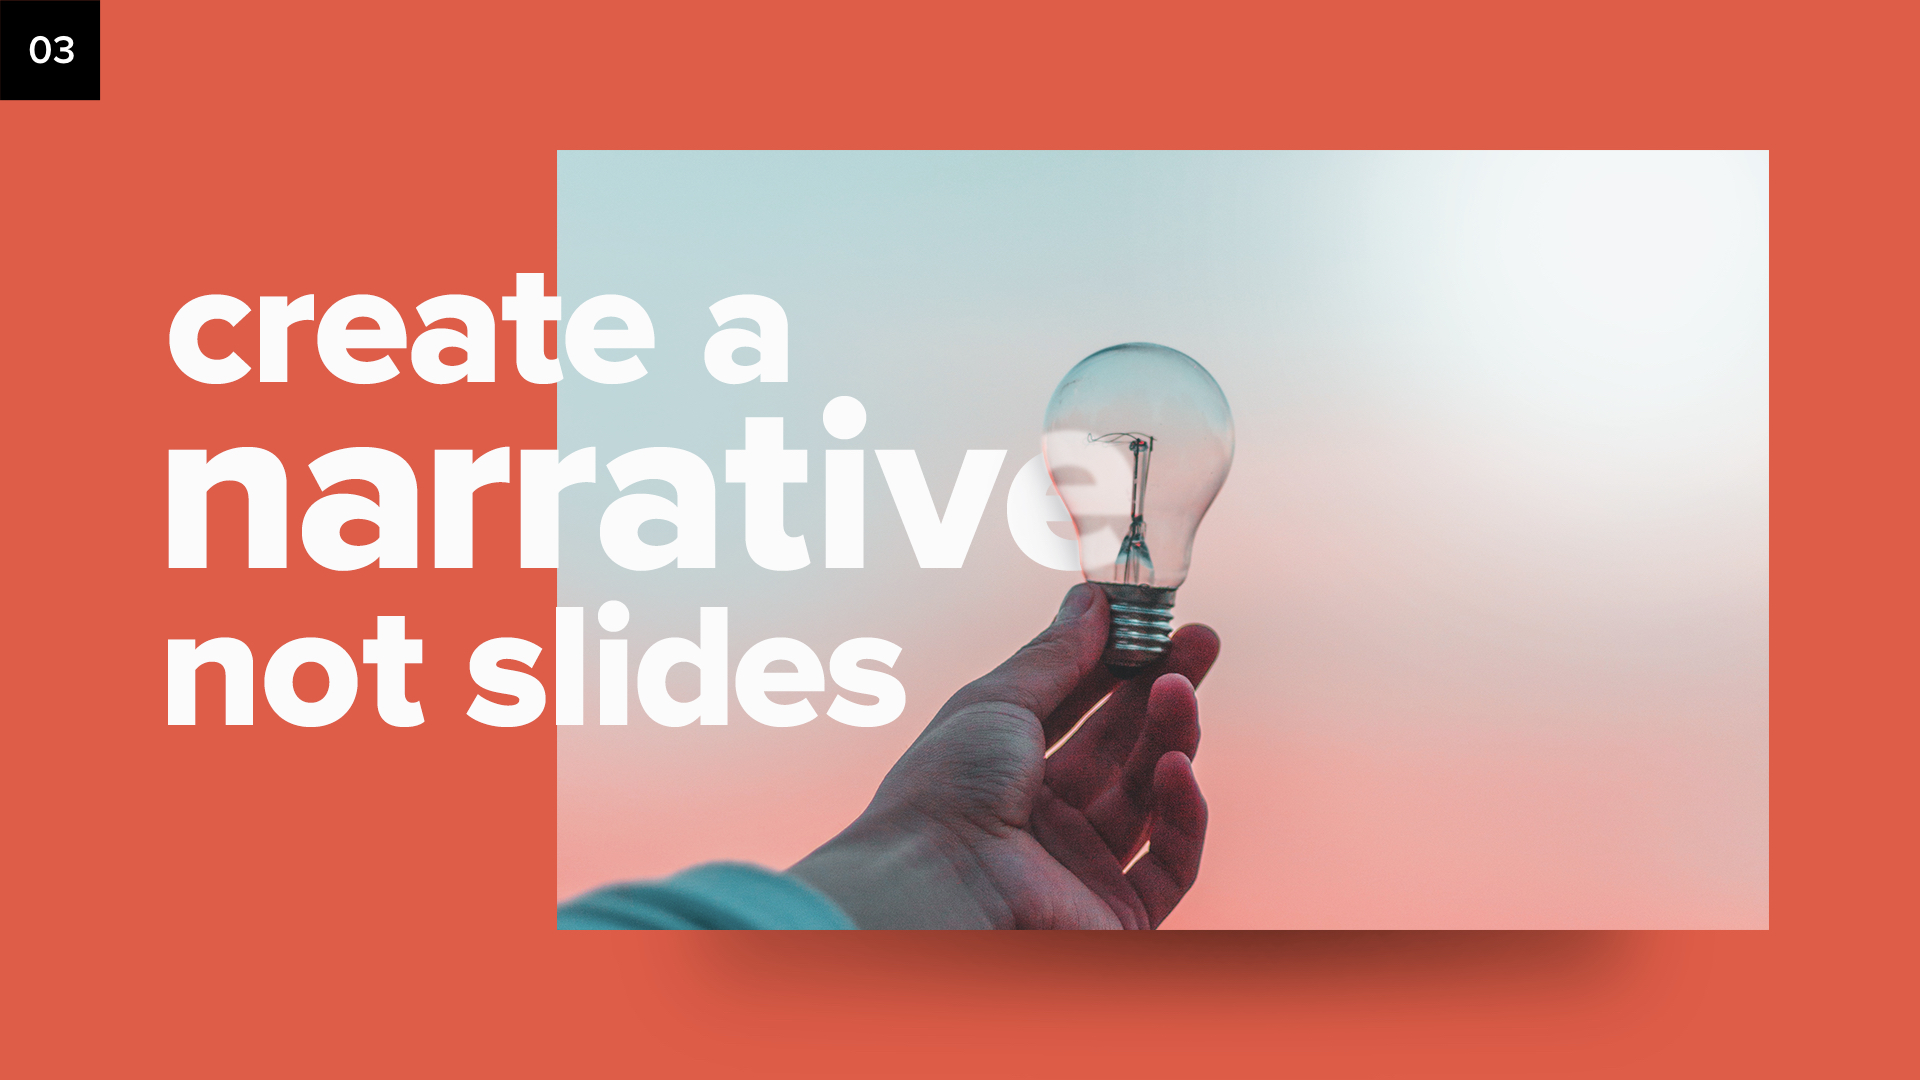 Create a narrative not slides